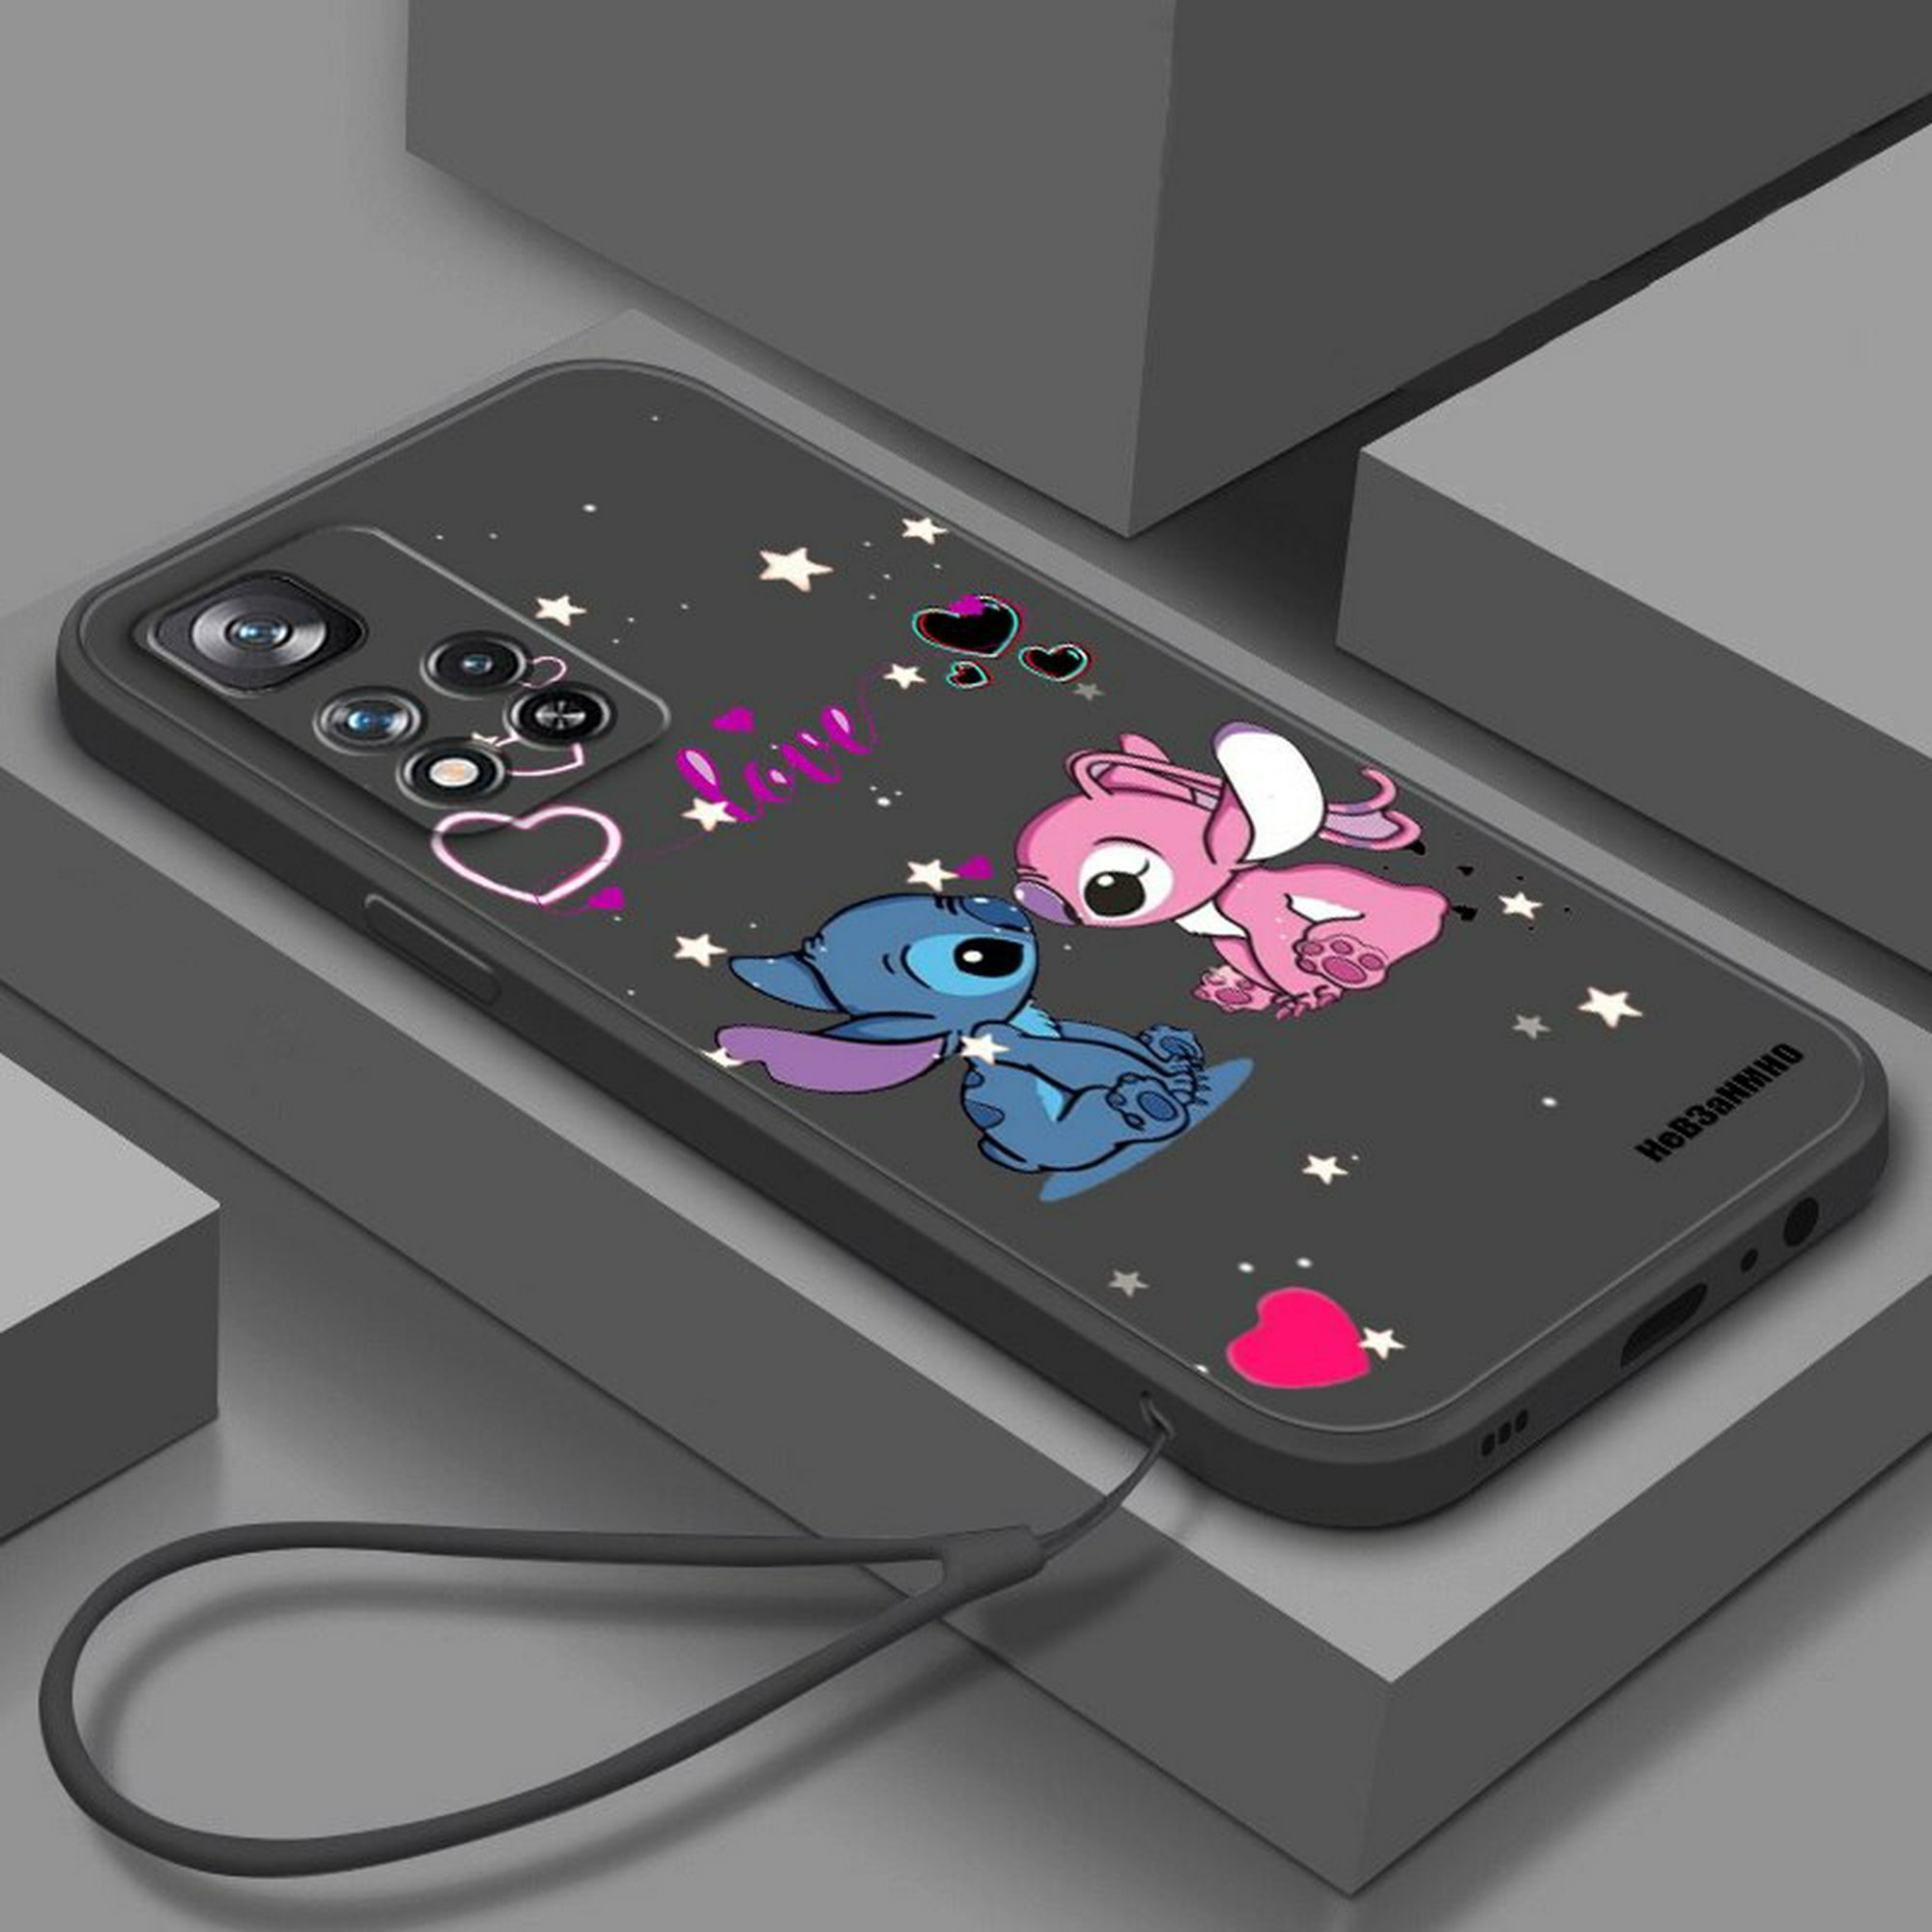 Funda Silicona Antigolpes para Xiaomi Redmi Note 9S / Note 9 Pro diseño  Flores 01 Dibujos